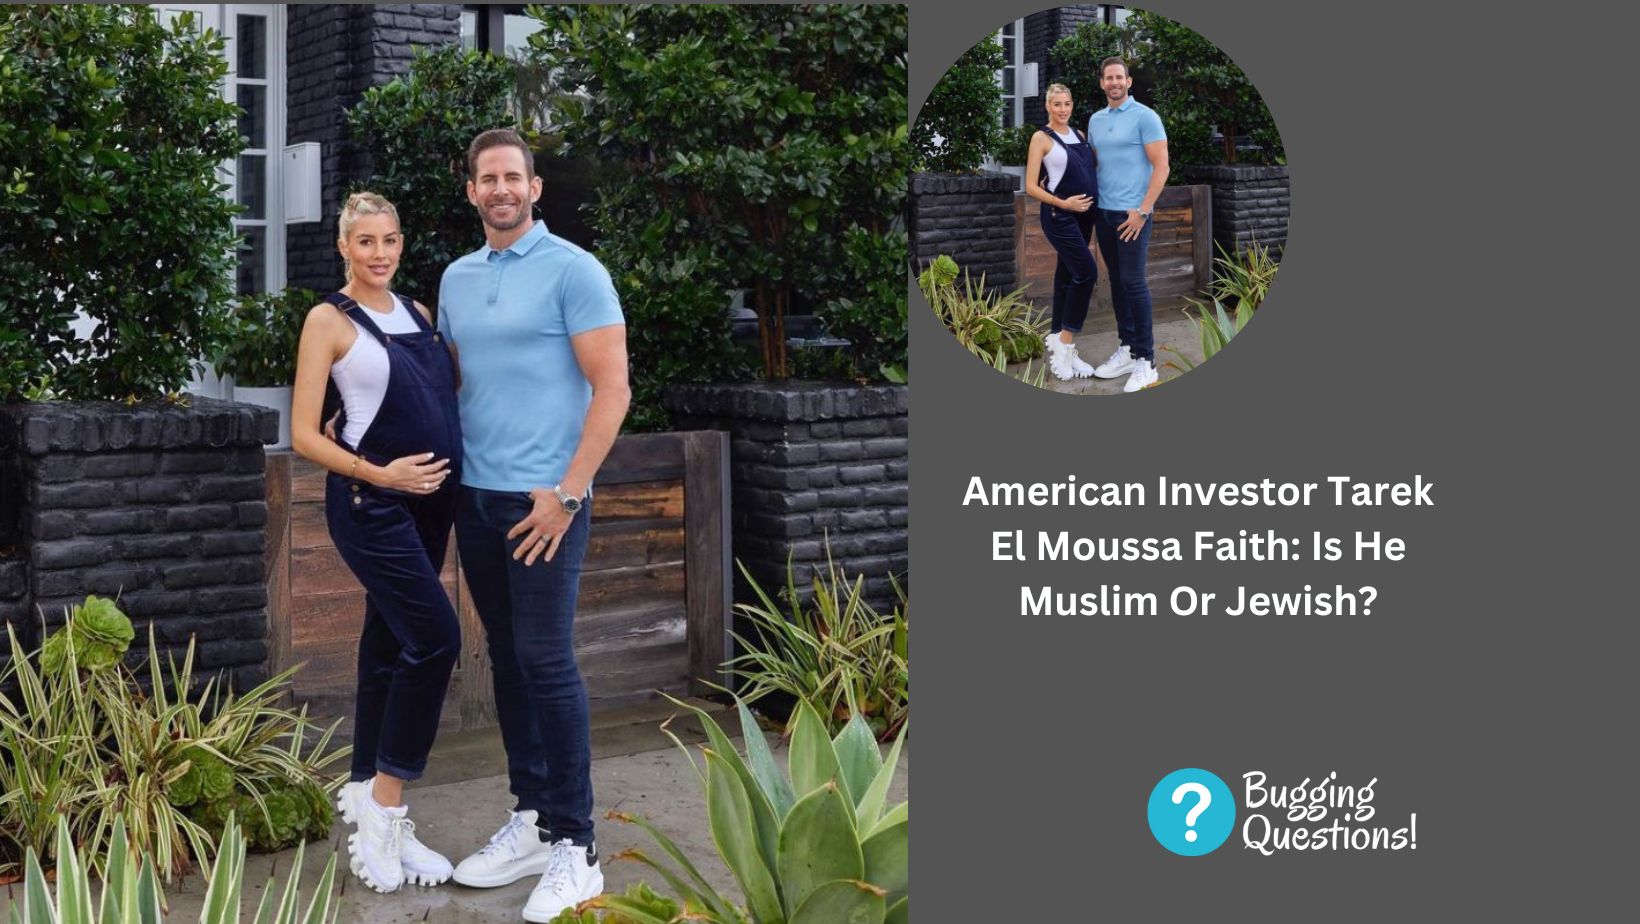 American Investor Tarek El Moussa Faith: Is He Muslim Or Jewish?